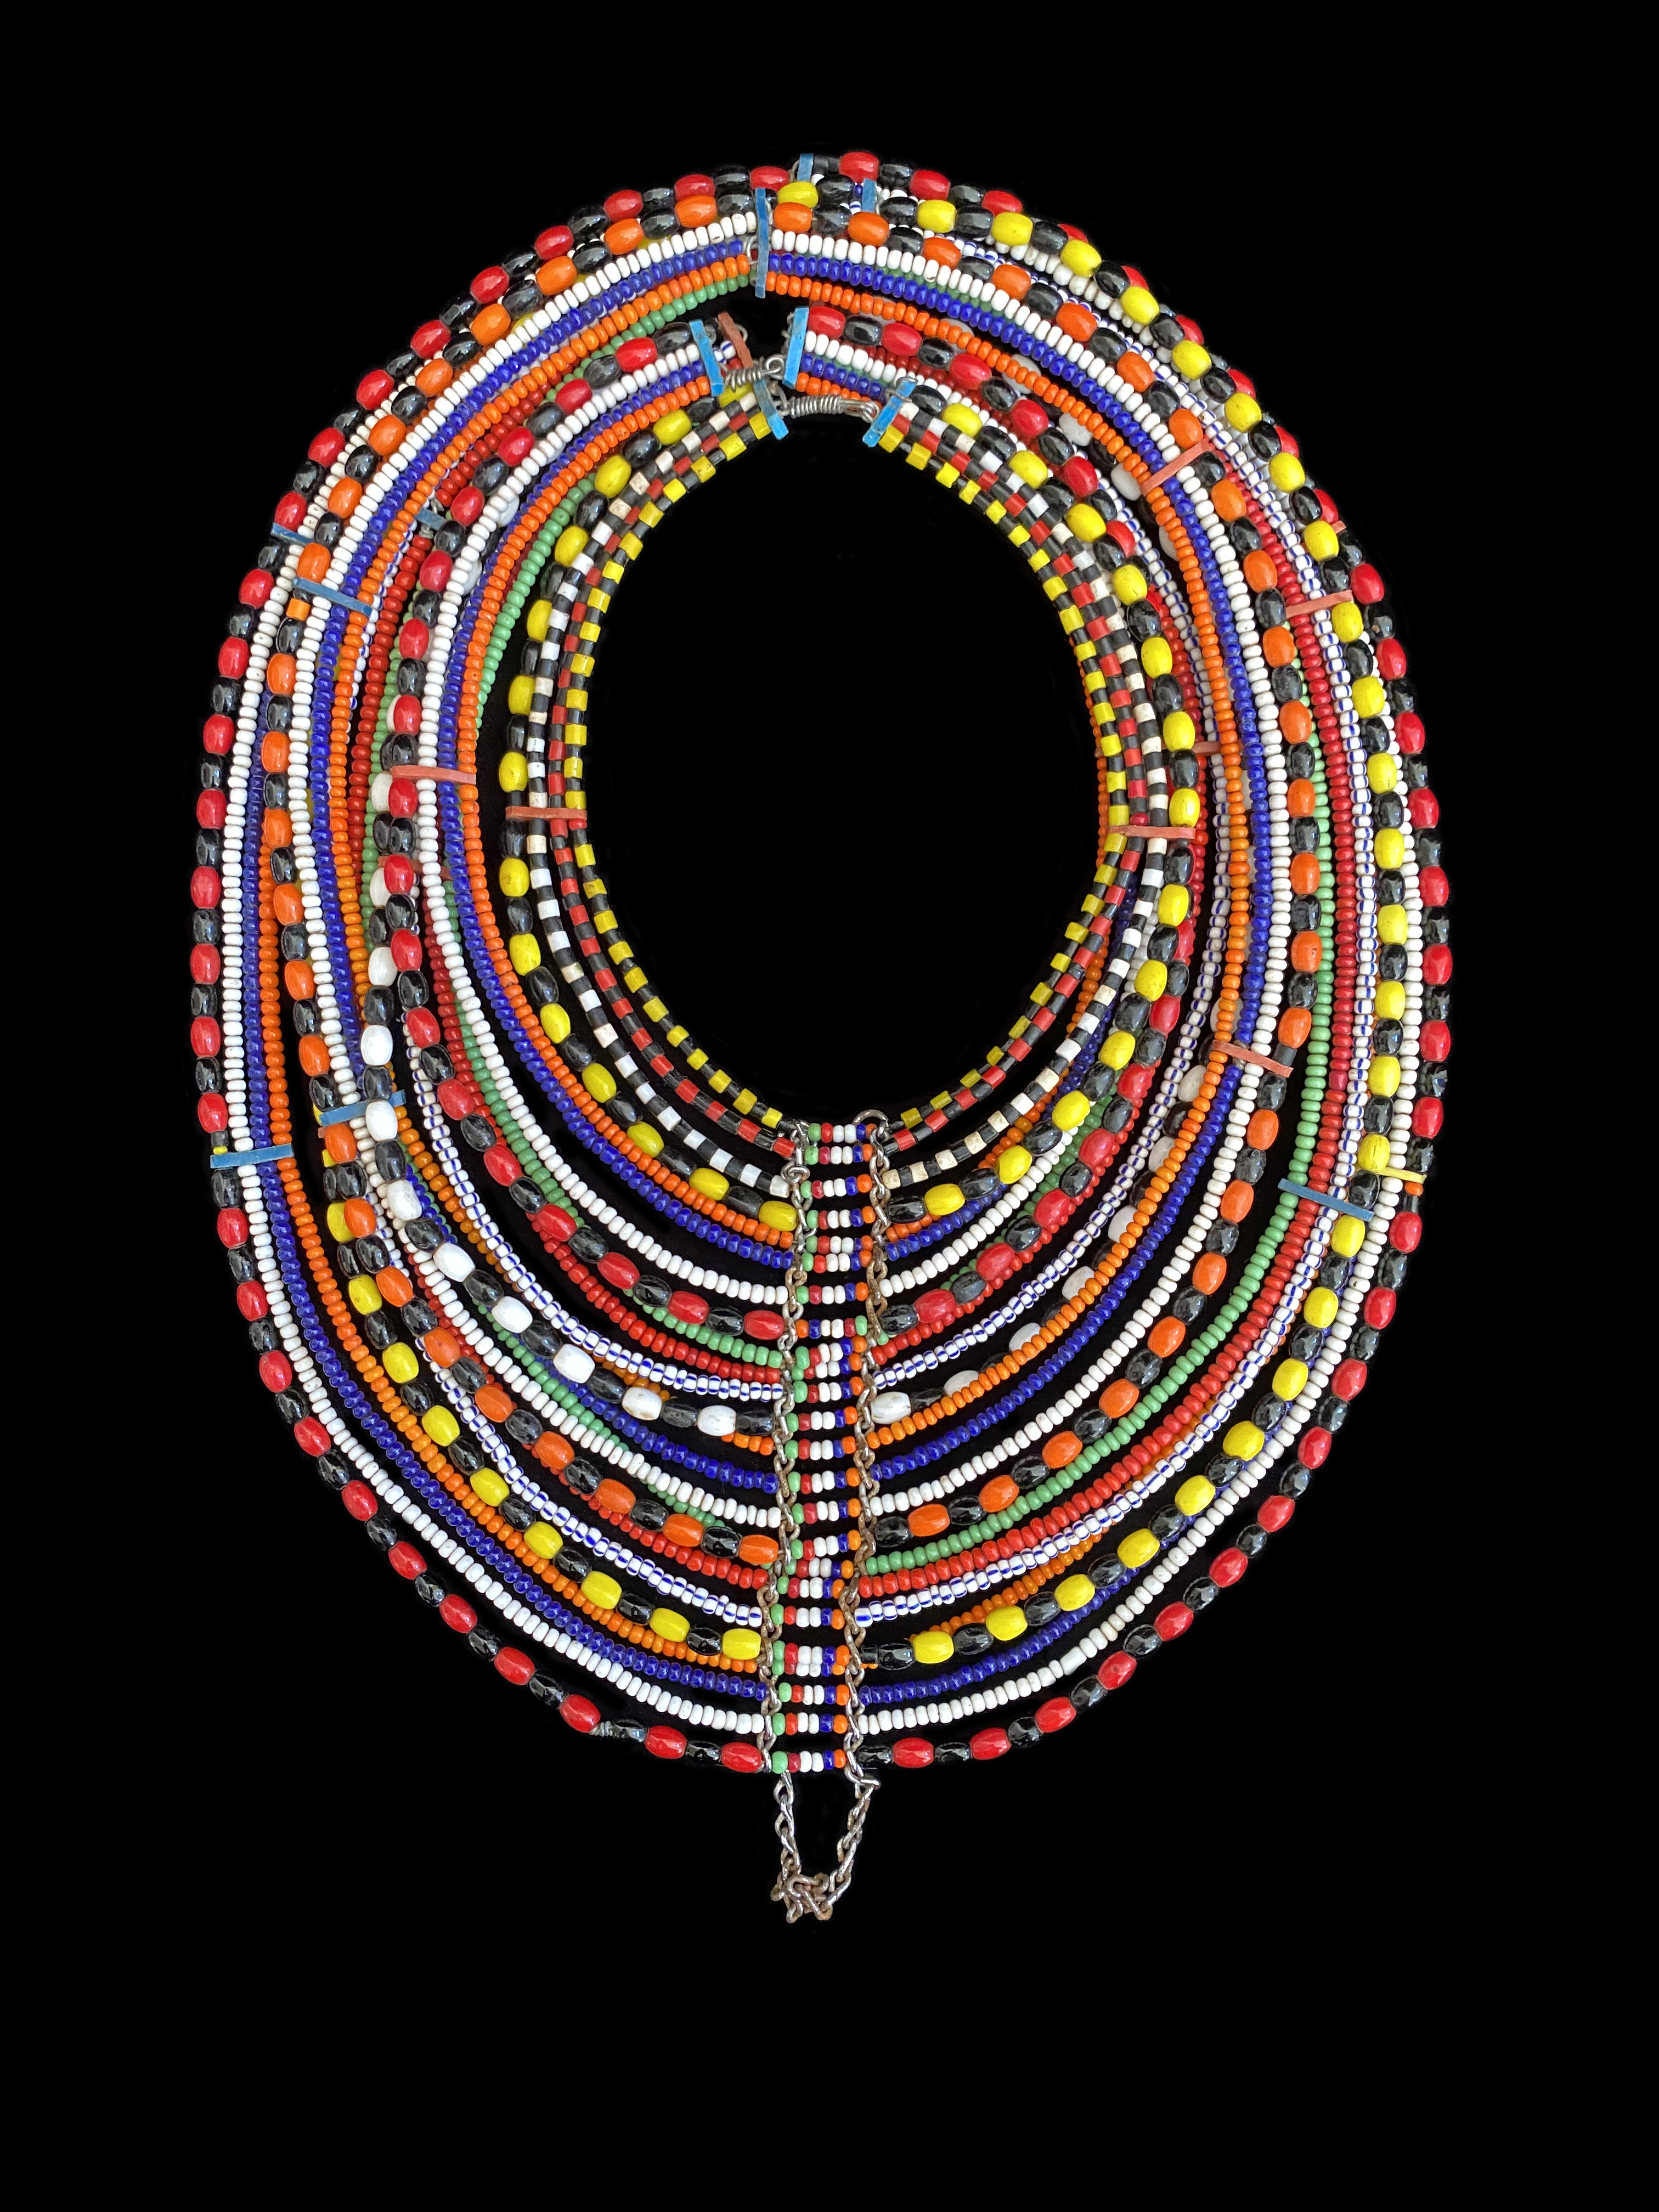 The Maasai beaded jewellery 